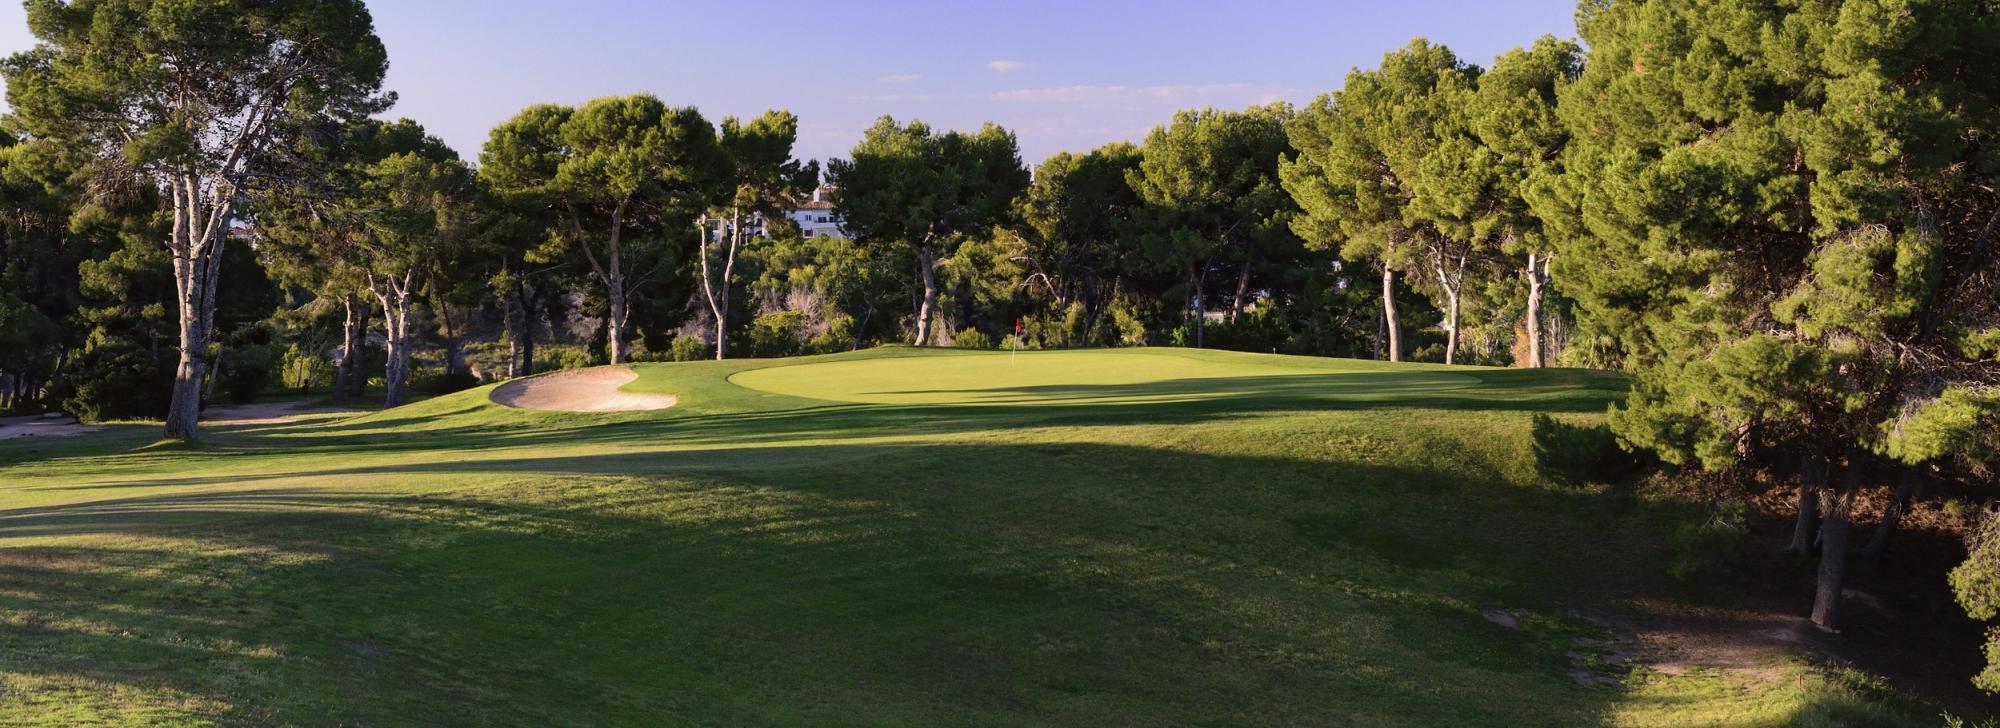 View Villamartin Golf Course's beautiful golf course in vibrant Costa Blanca.